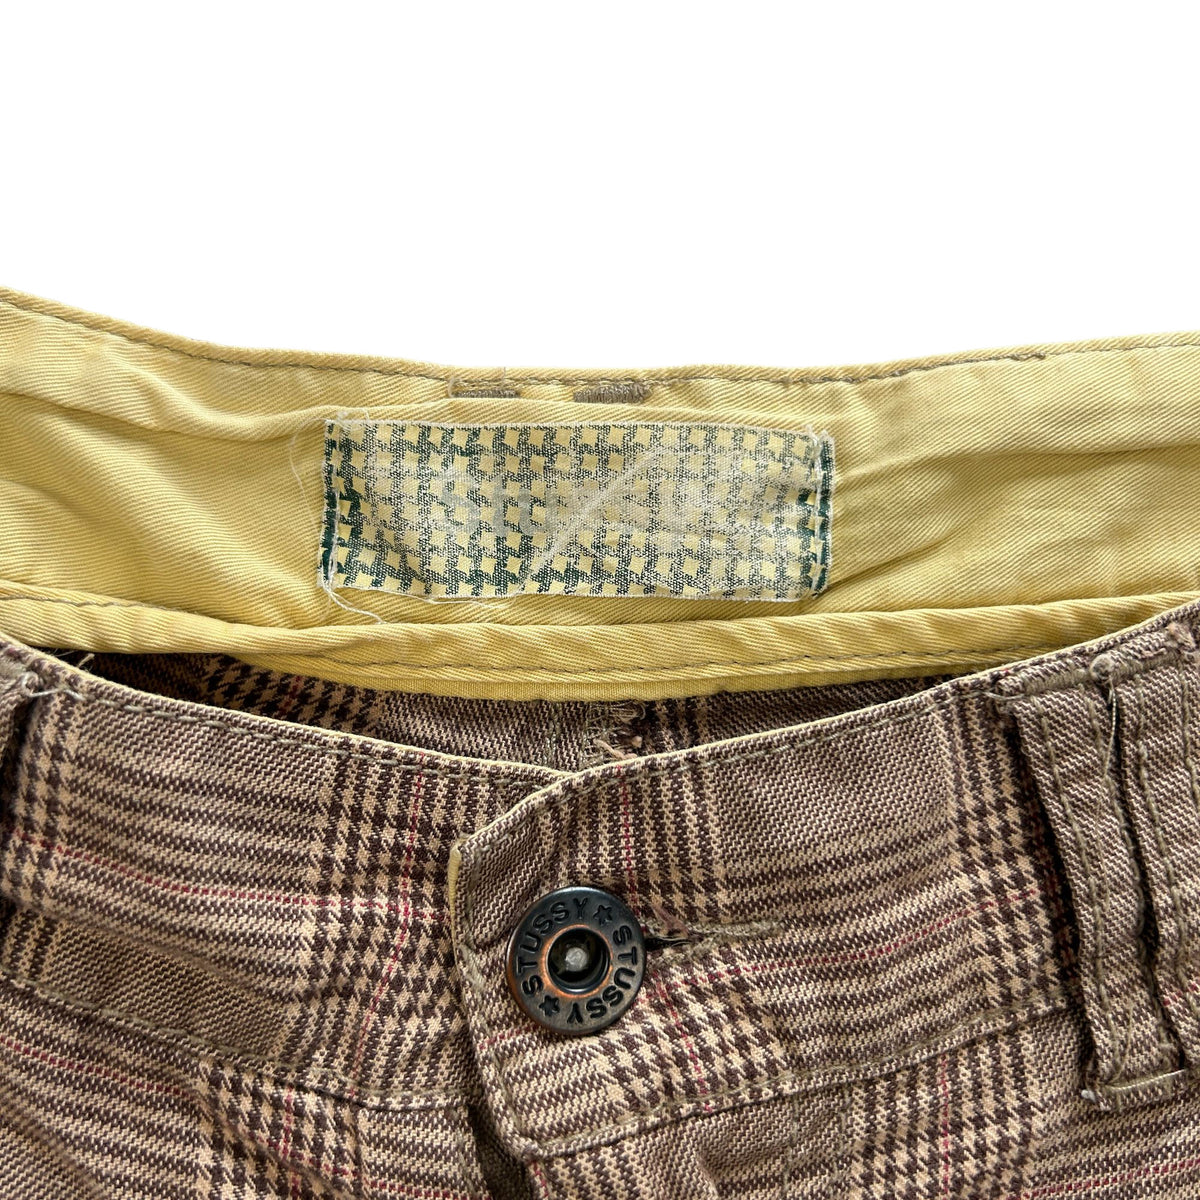 Vintage Stussy Check Shorts Size W32